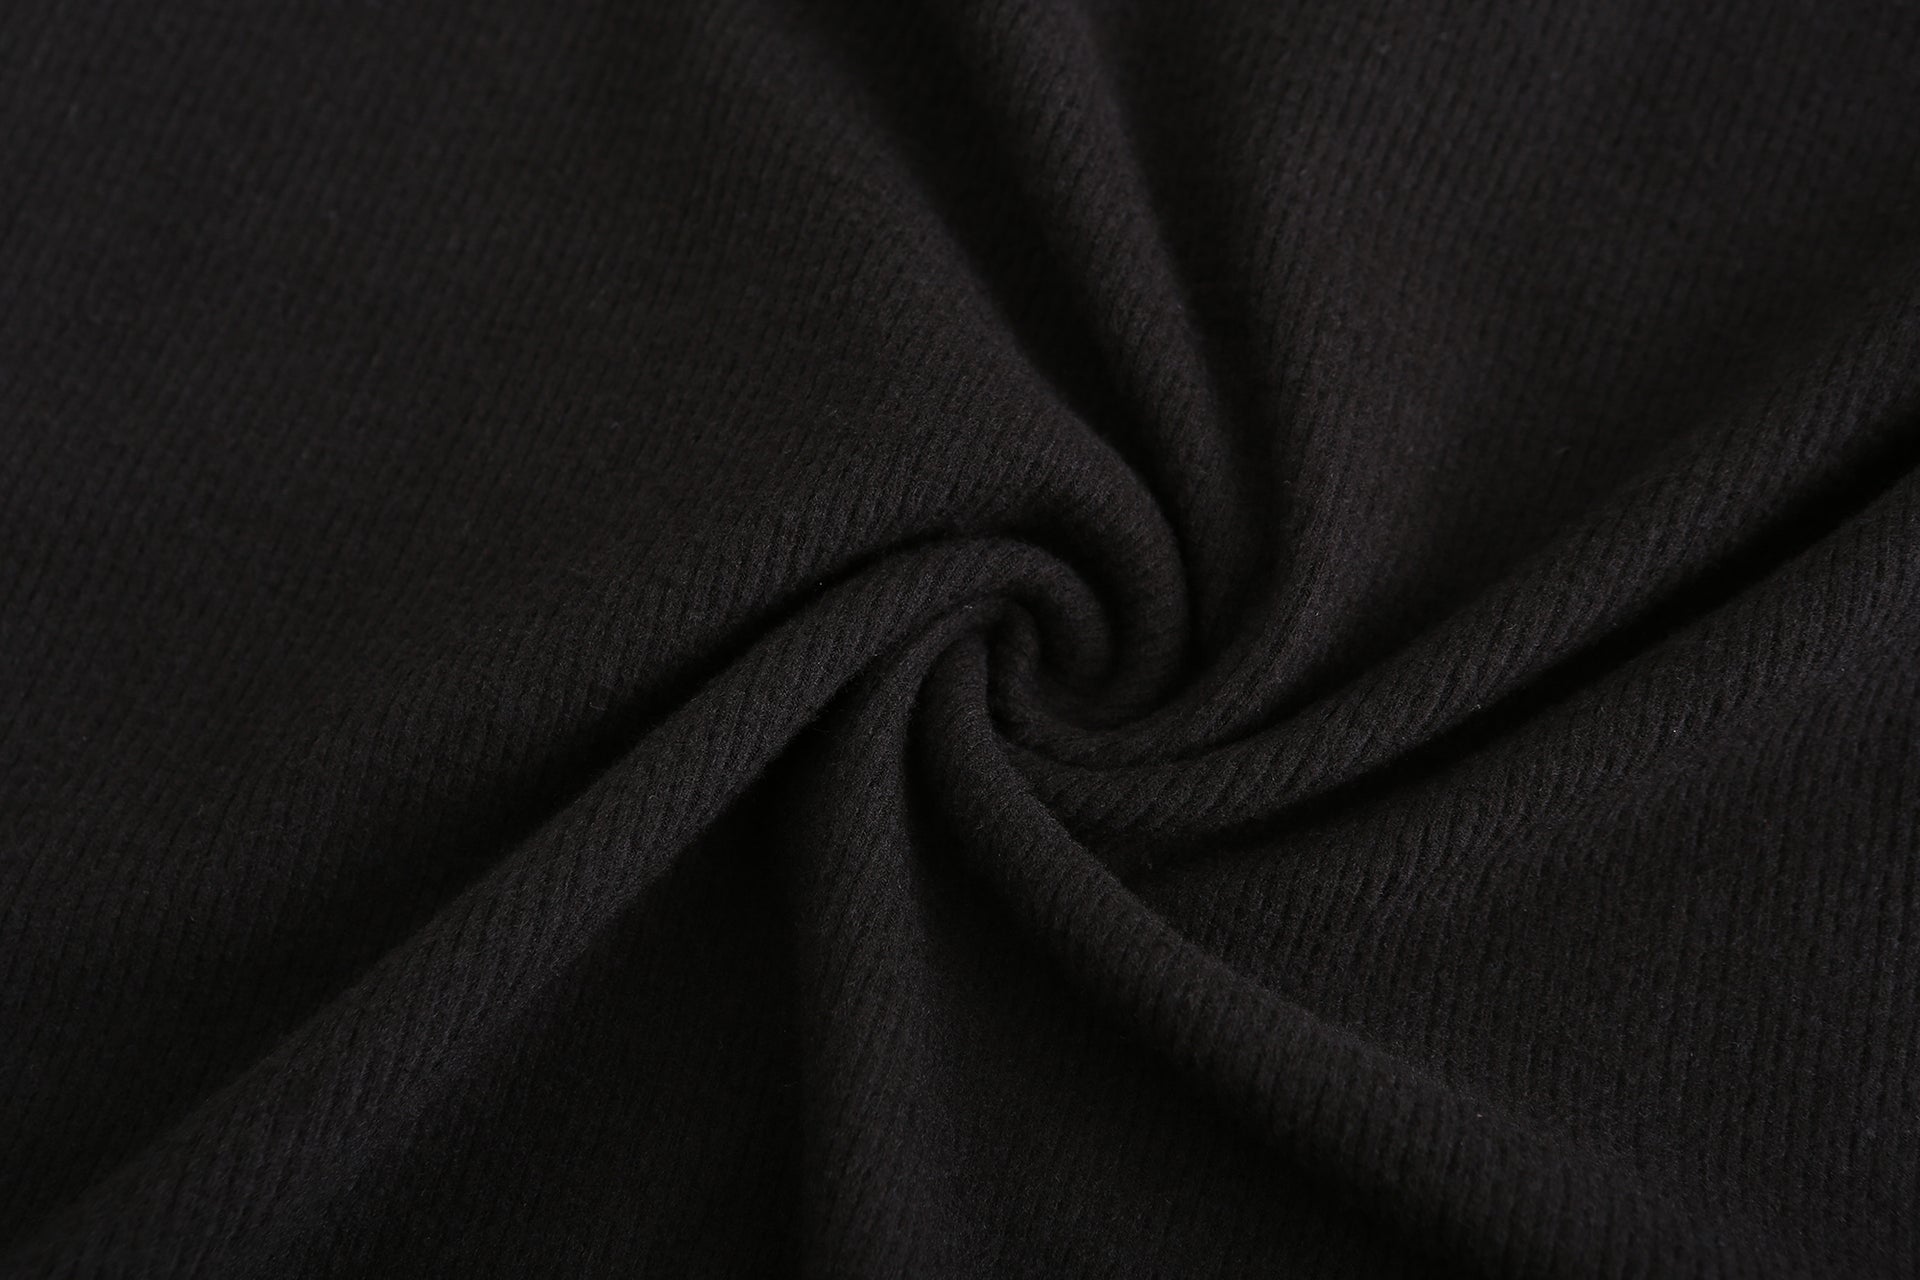 Bing Off-Shoulder Mini Dress, fabric, close up